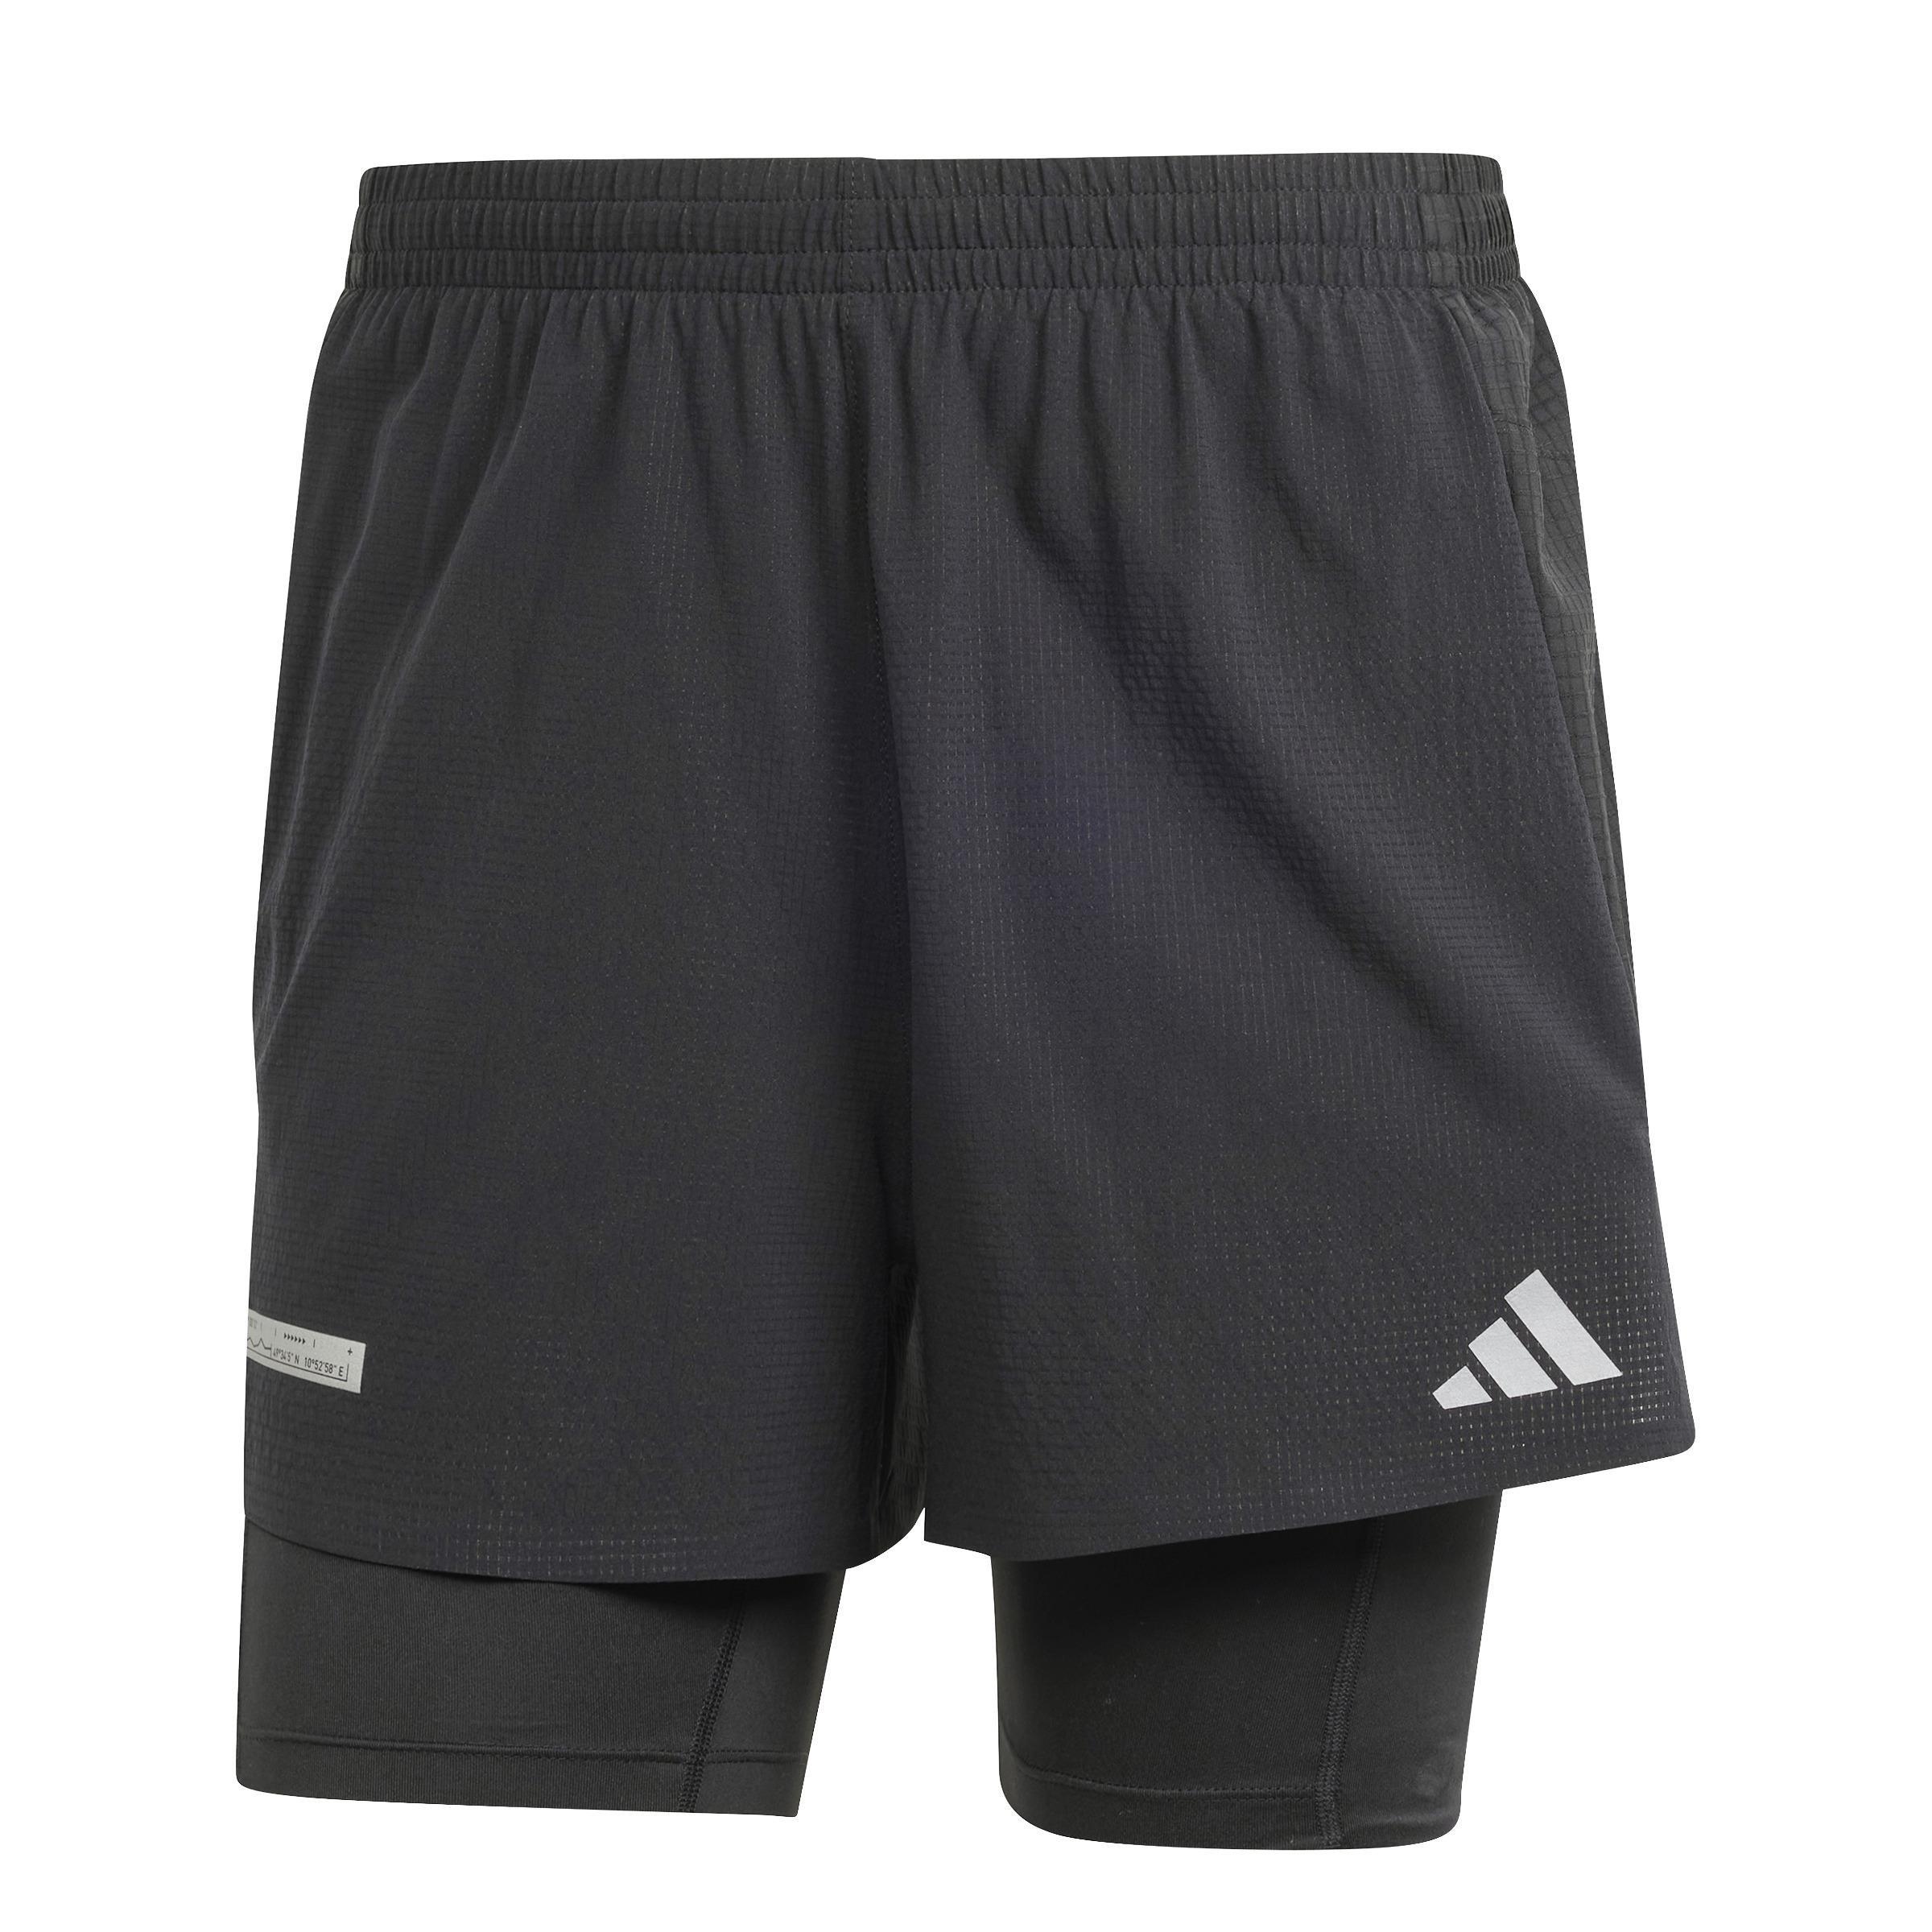 adidas - Men Ultimateadidas 2-In-1 Shorts, Black